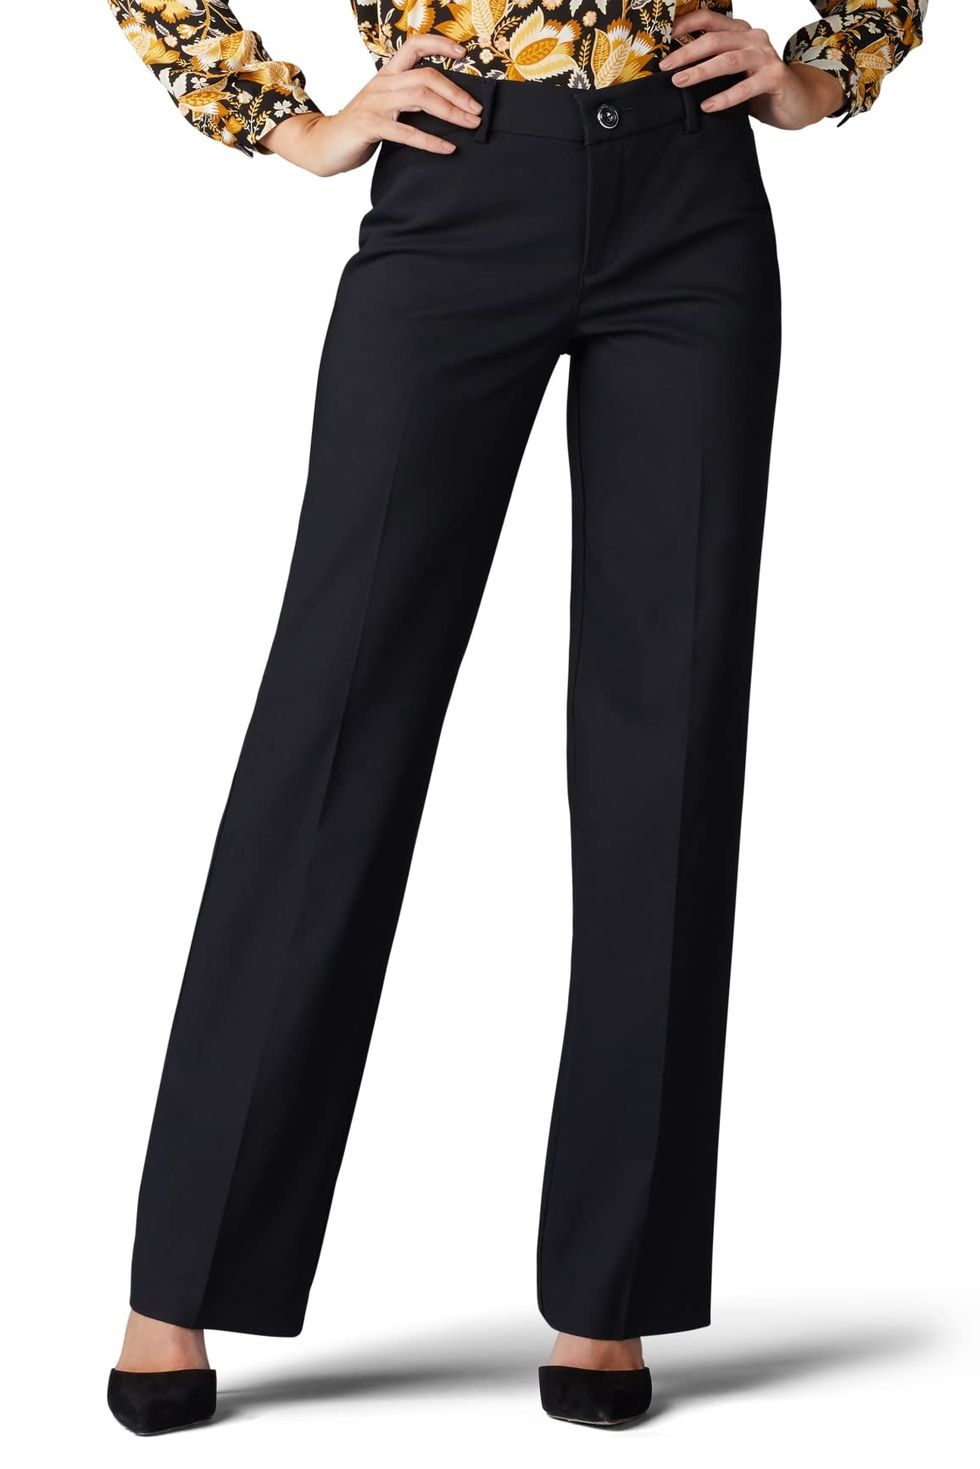 SweatyRocks Women's Elegant High Waist Belted Pants Straight Leg Office  Suit Pants Trousers Black S at  Women's Clothing store